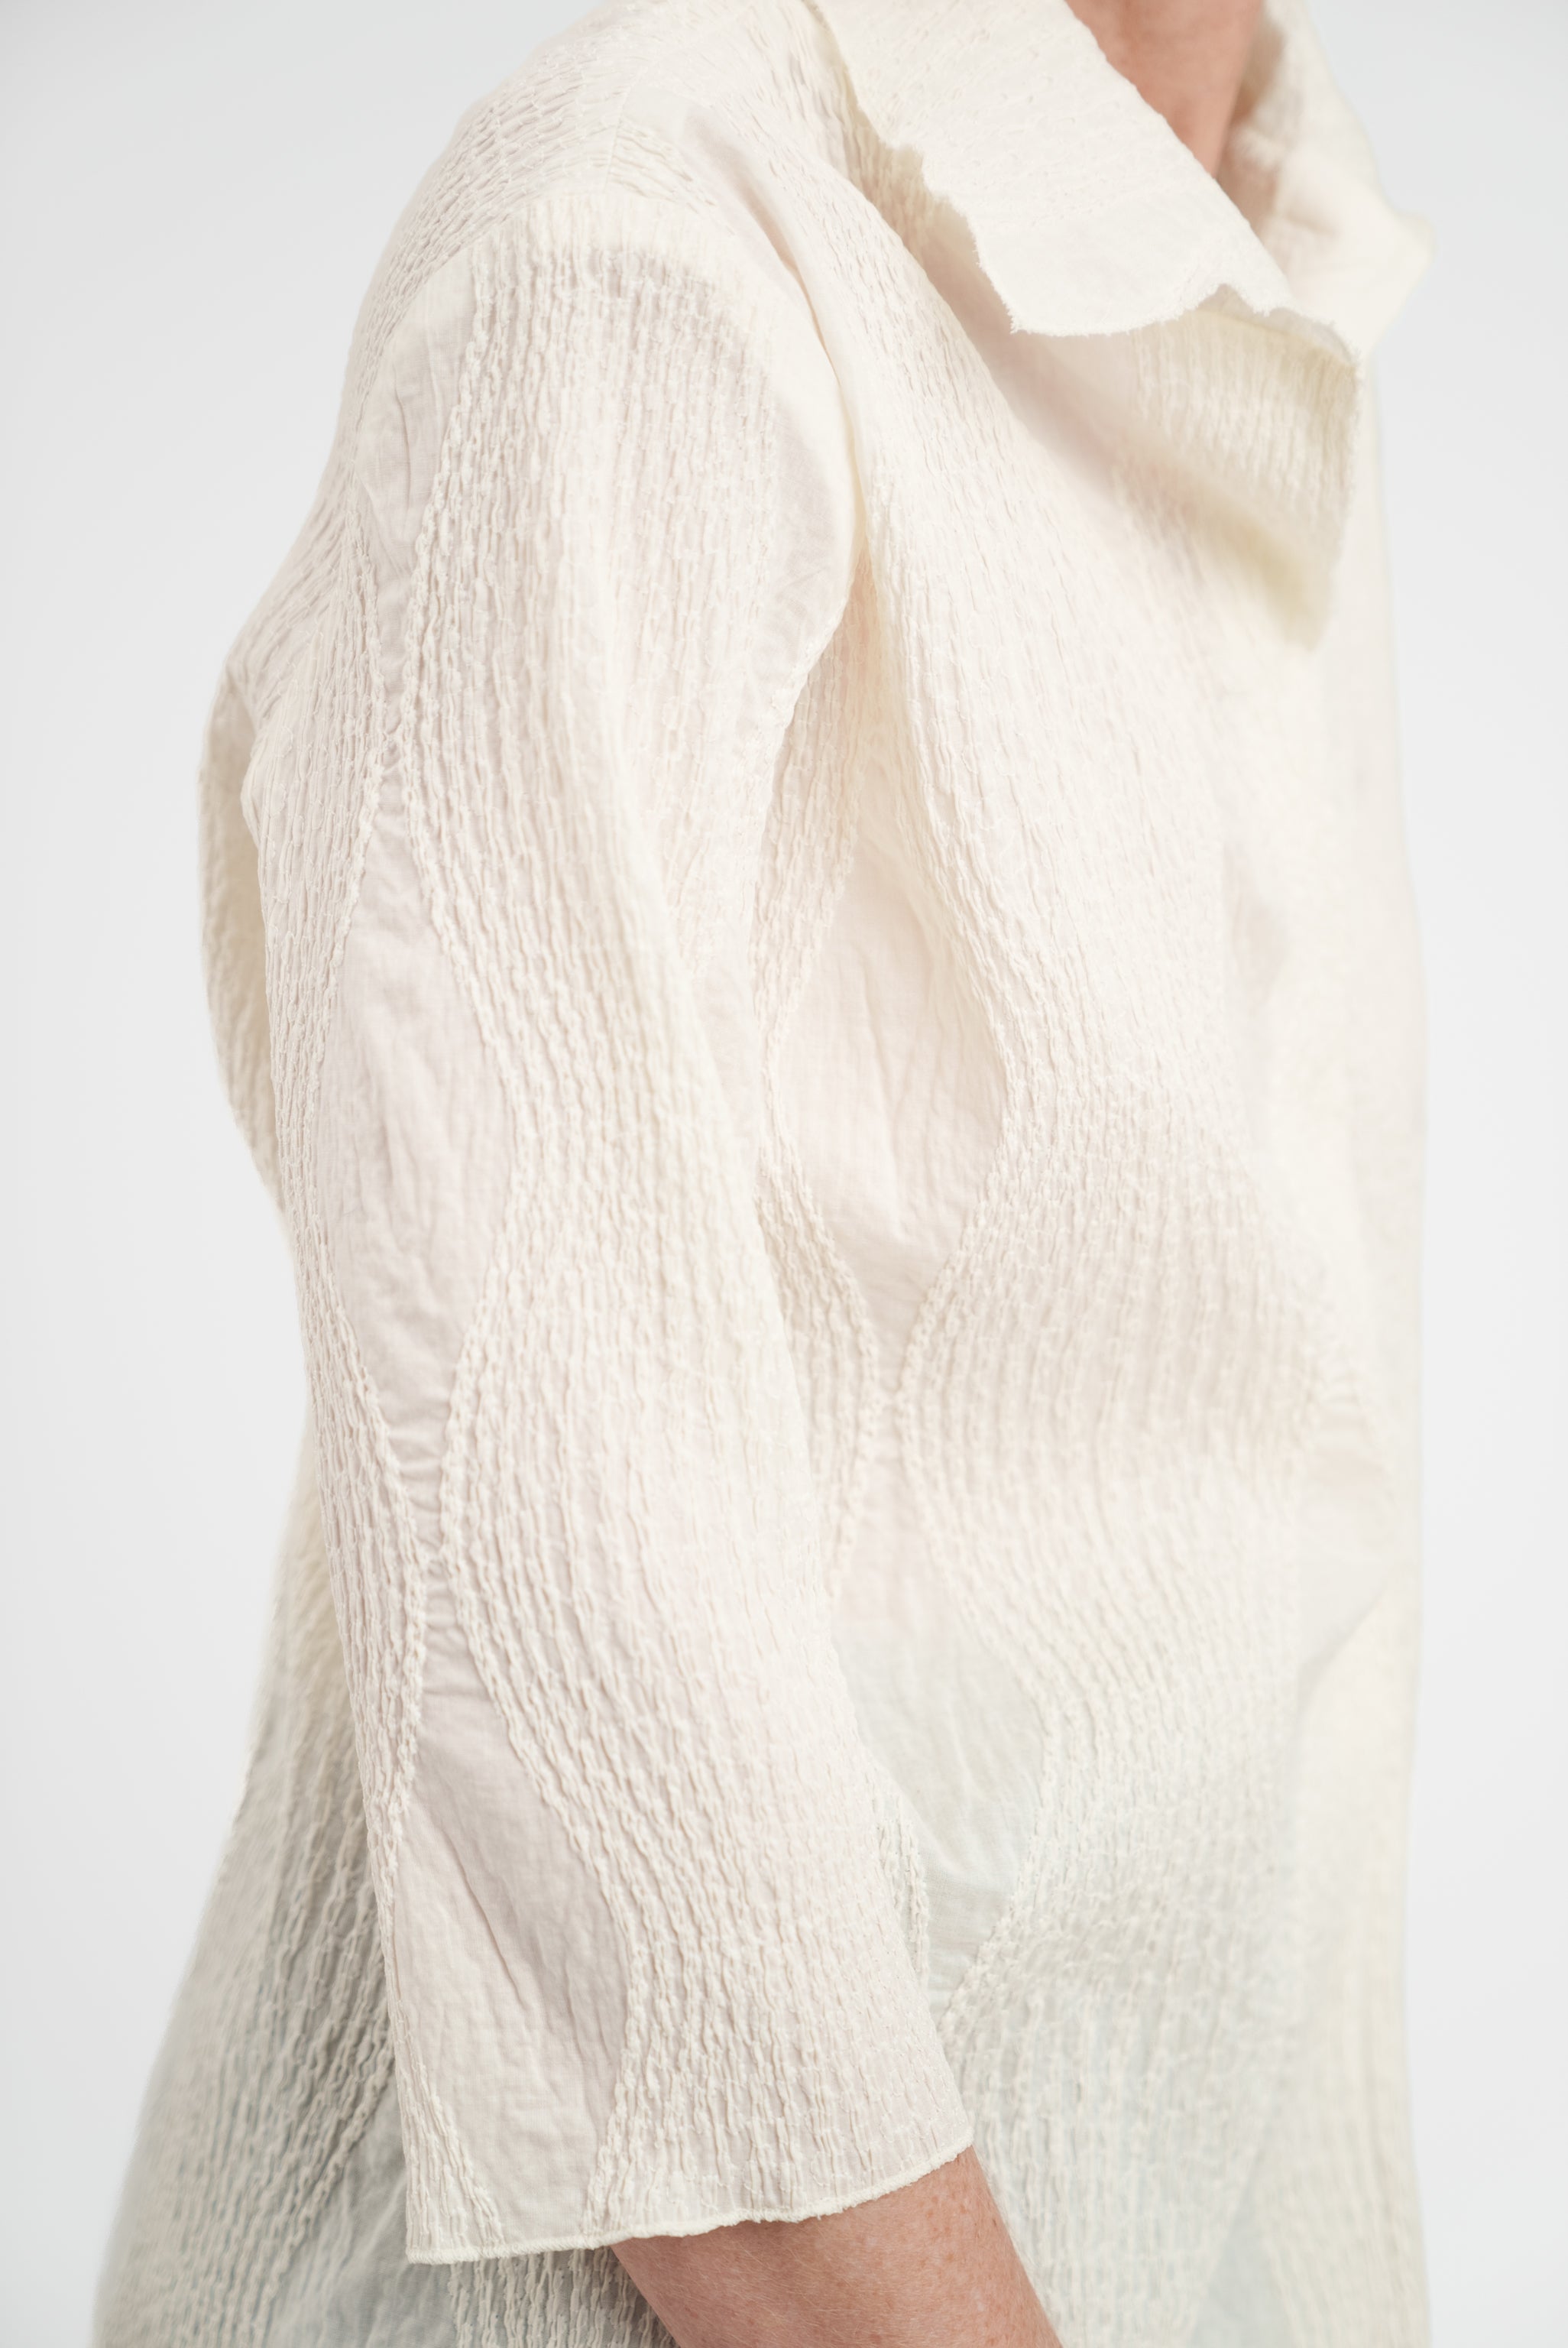 Ripple Top in Nuno 'Fisheye' Ivory Cotton